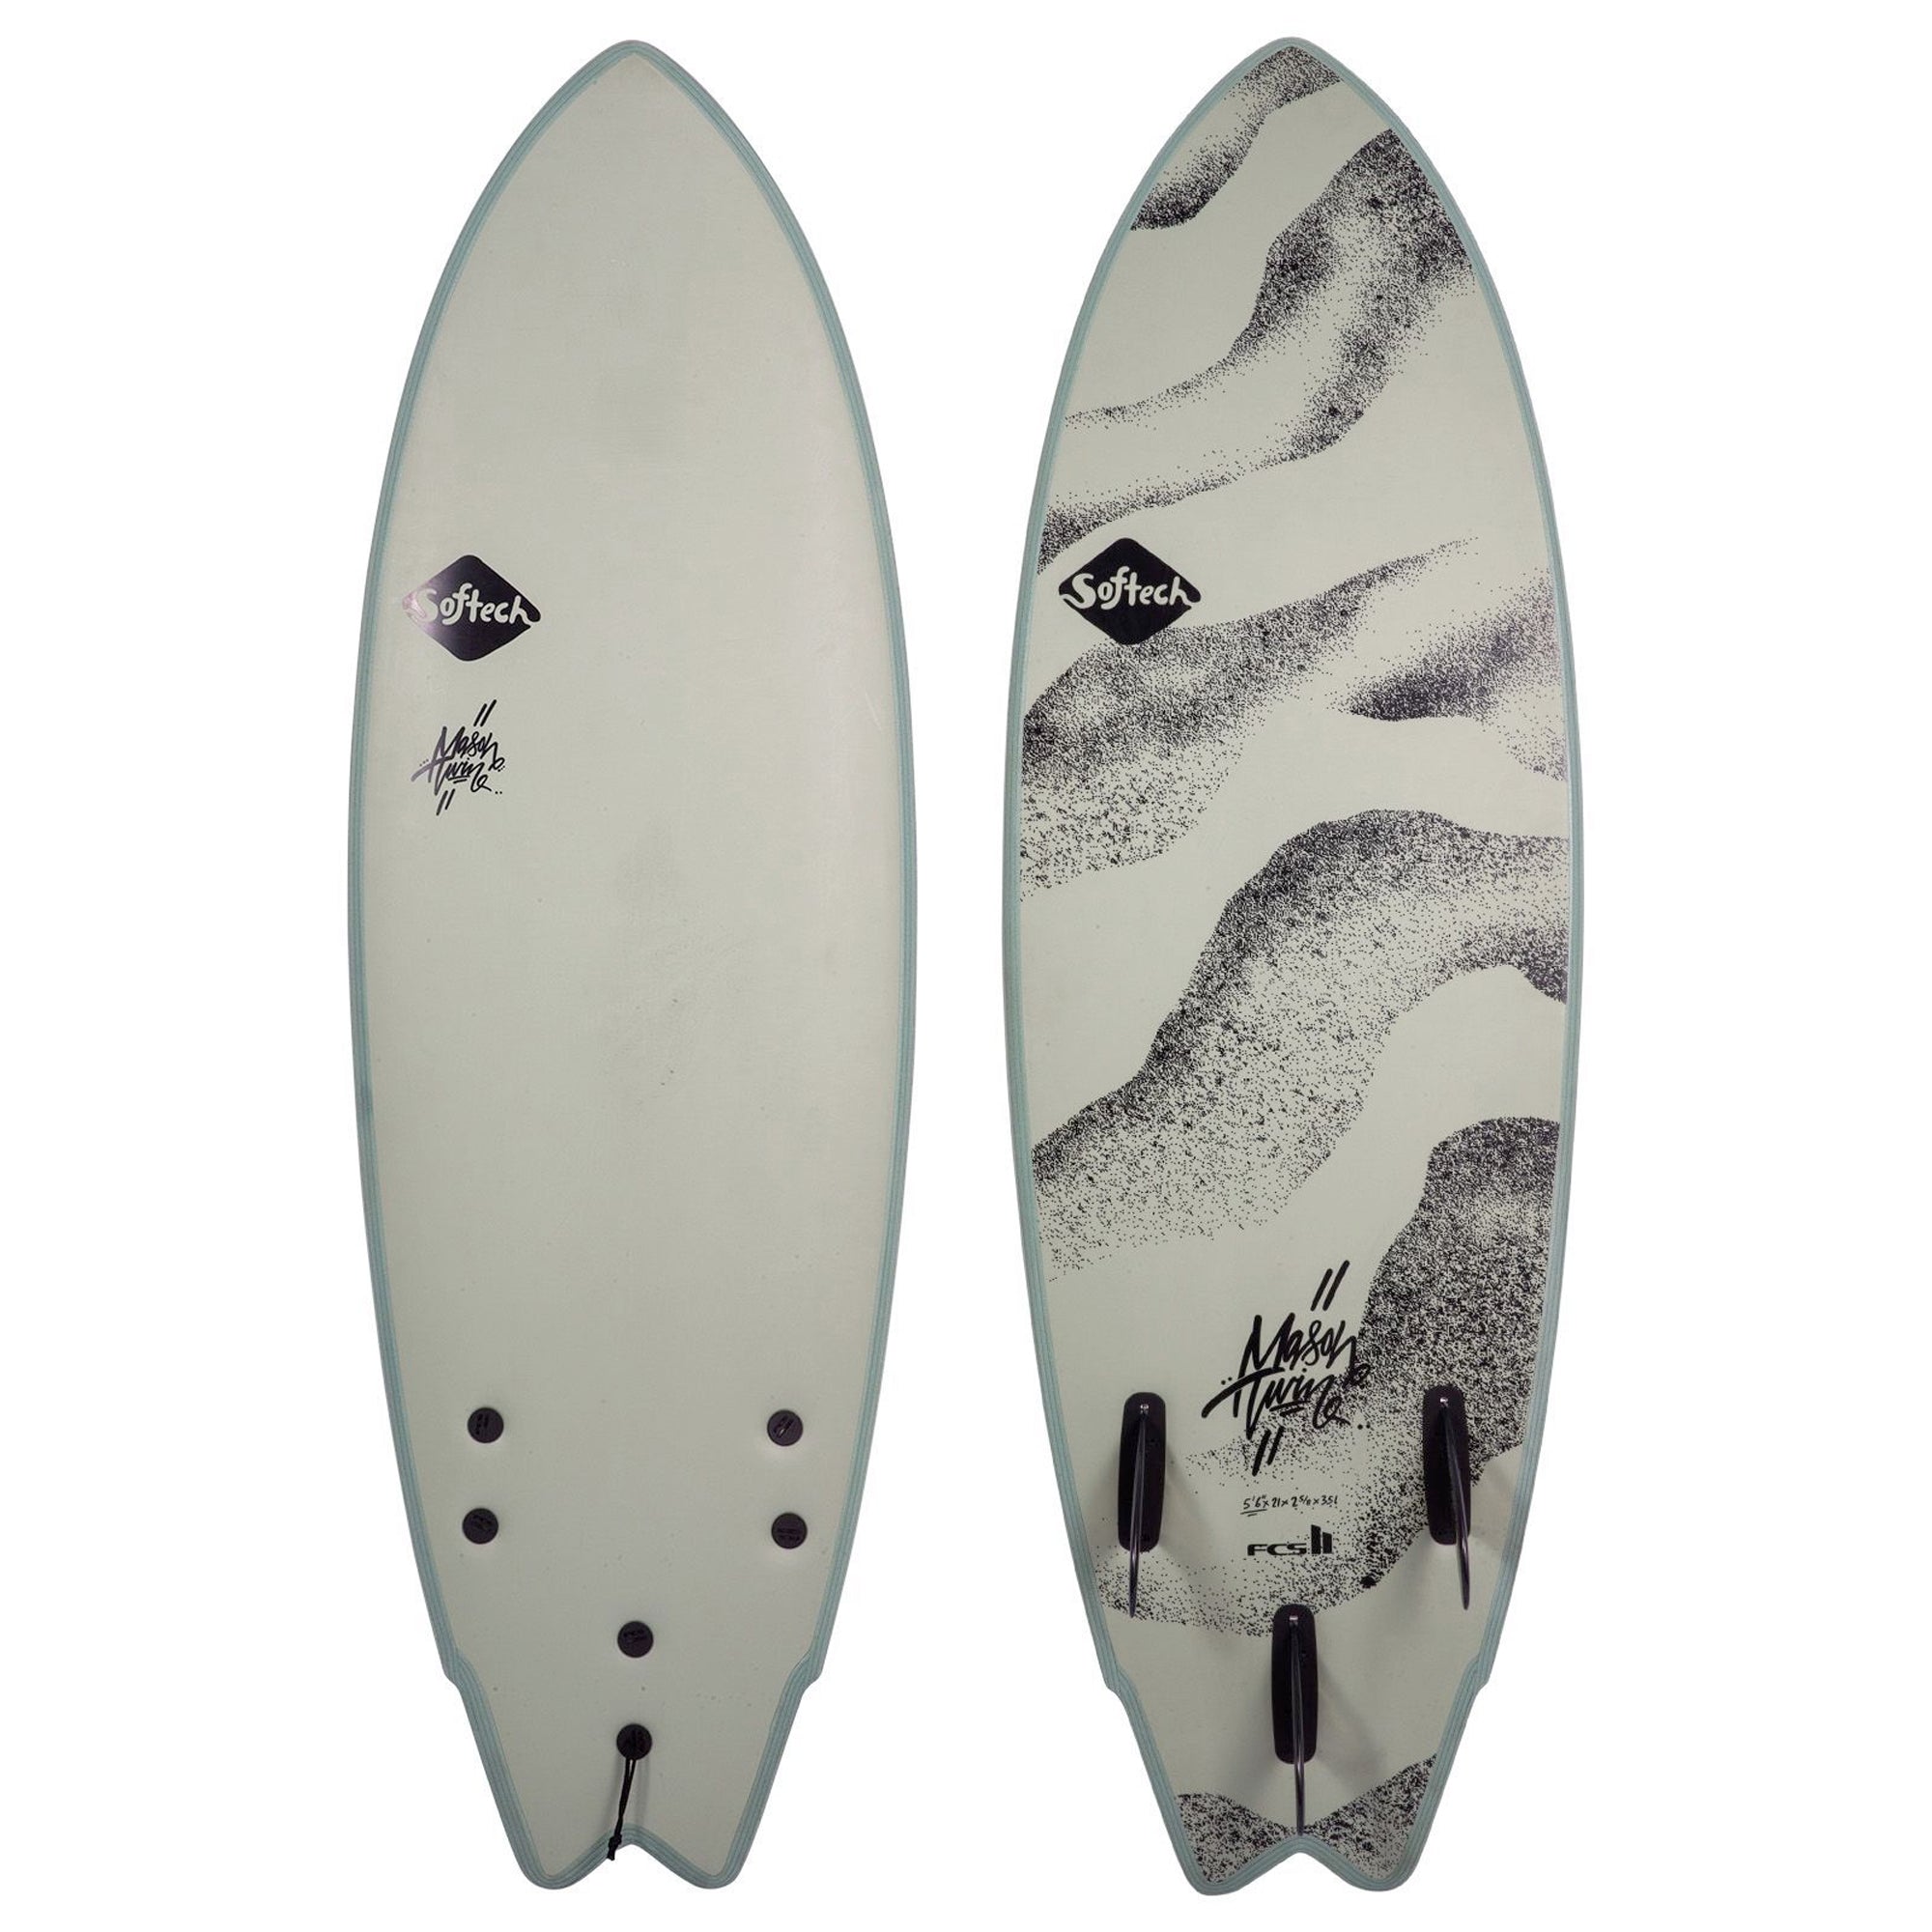 Softech Mason Ho Twin Soft Surfboard